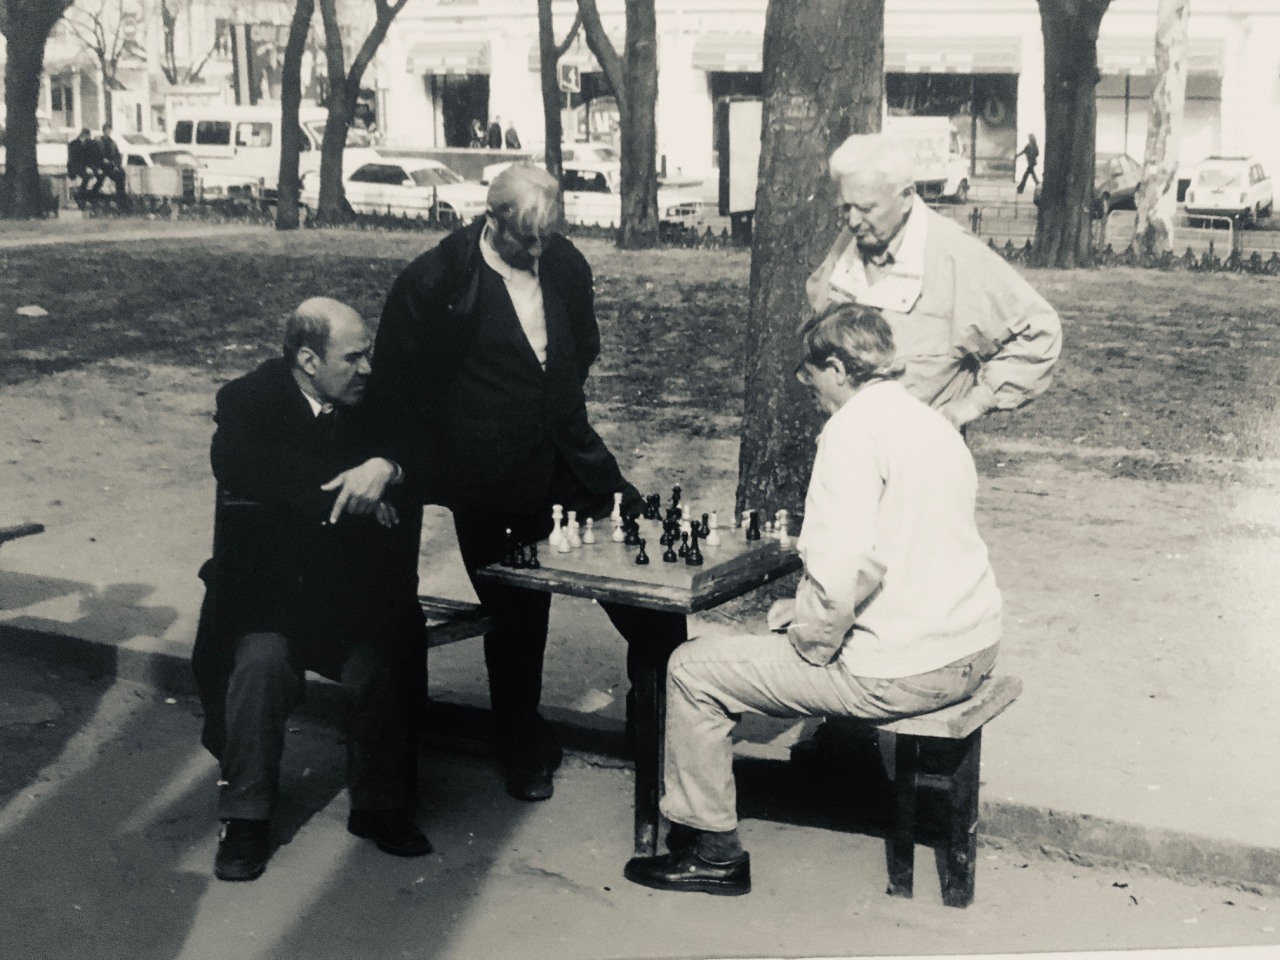 Nicholas Hopkins, The Chess Game, Soborna Square, 24th April 2003